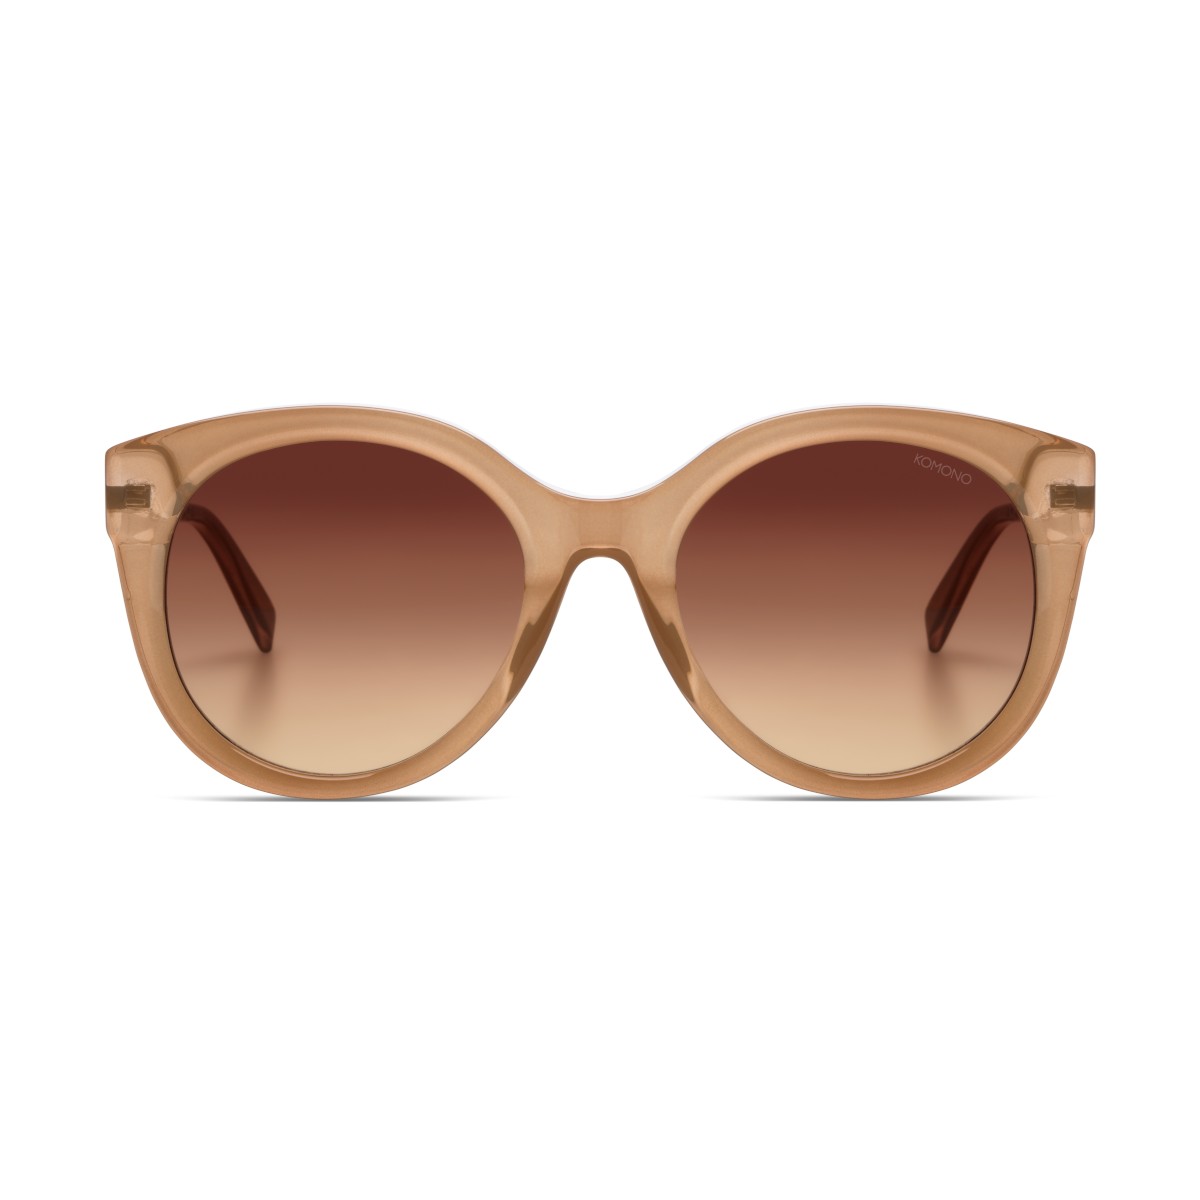 Komono Sunglasses - Στρογγυλά γυαλιά ηλίου - Sundown_1